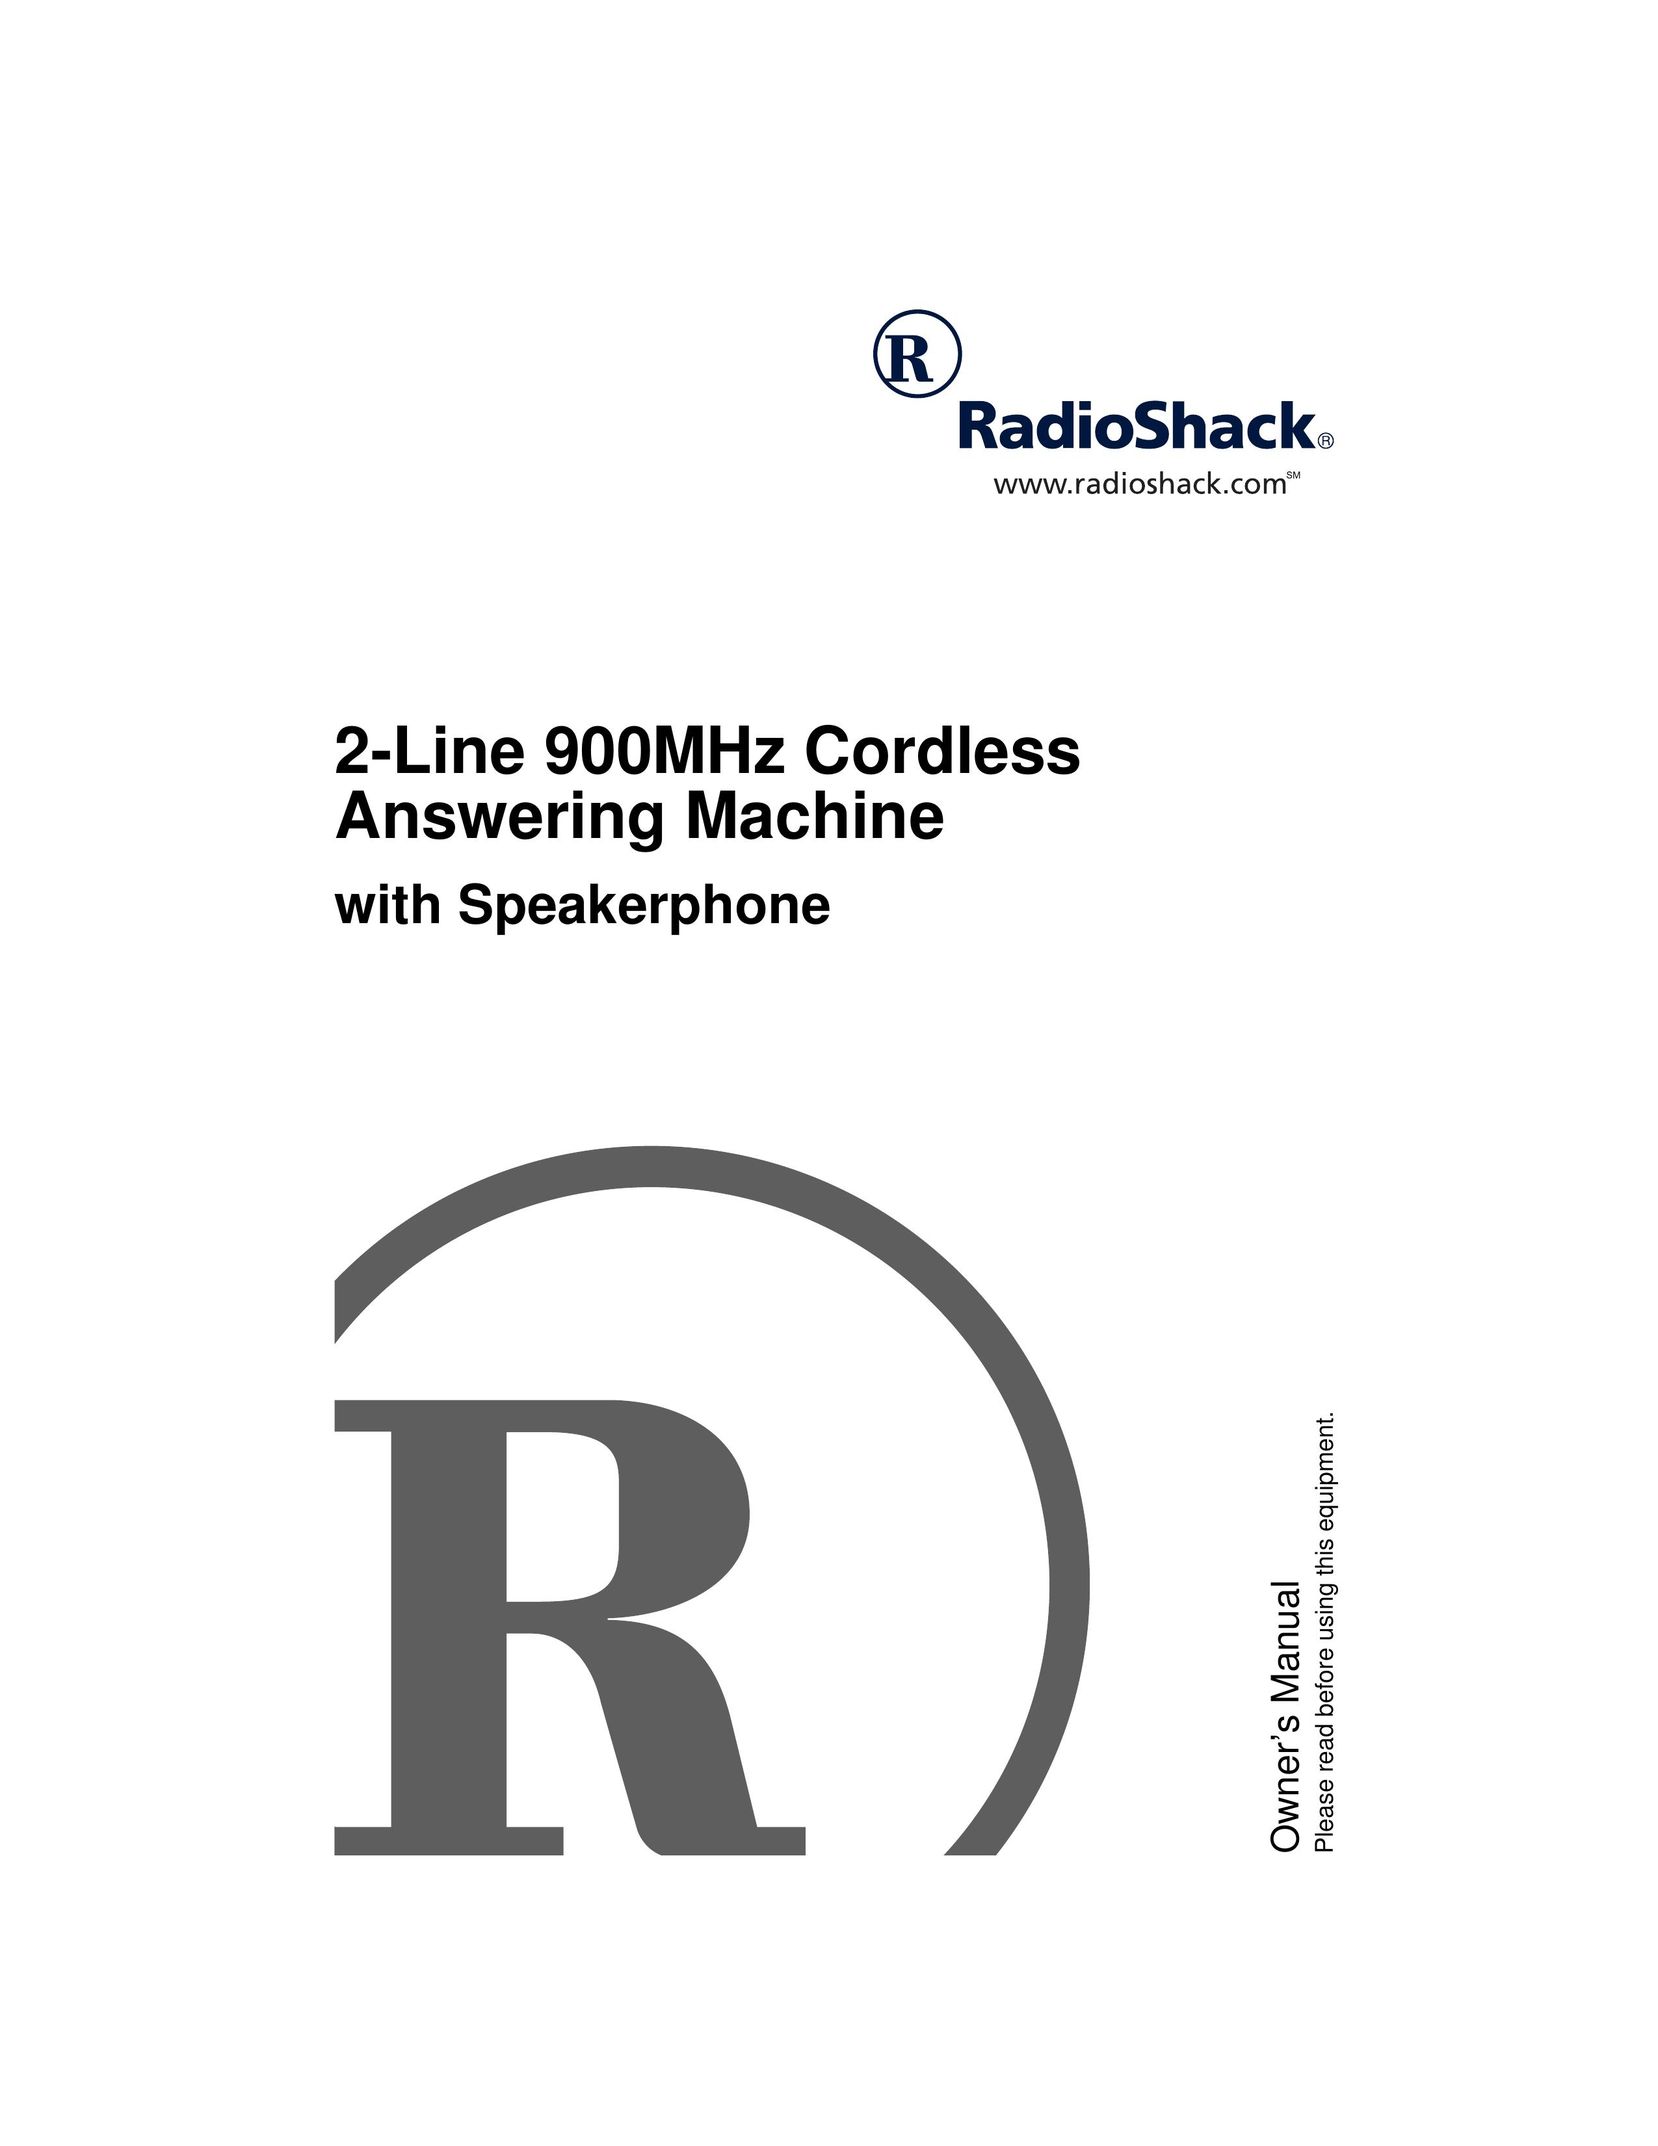 Radio Shack 900MHz Answering Machine User Manual